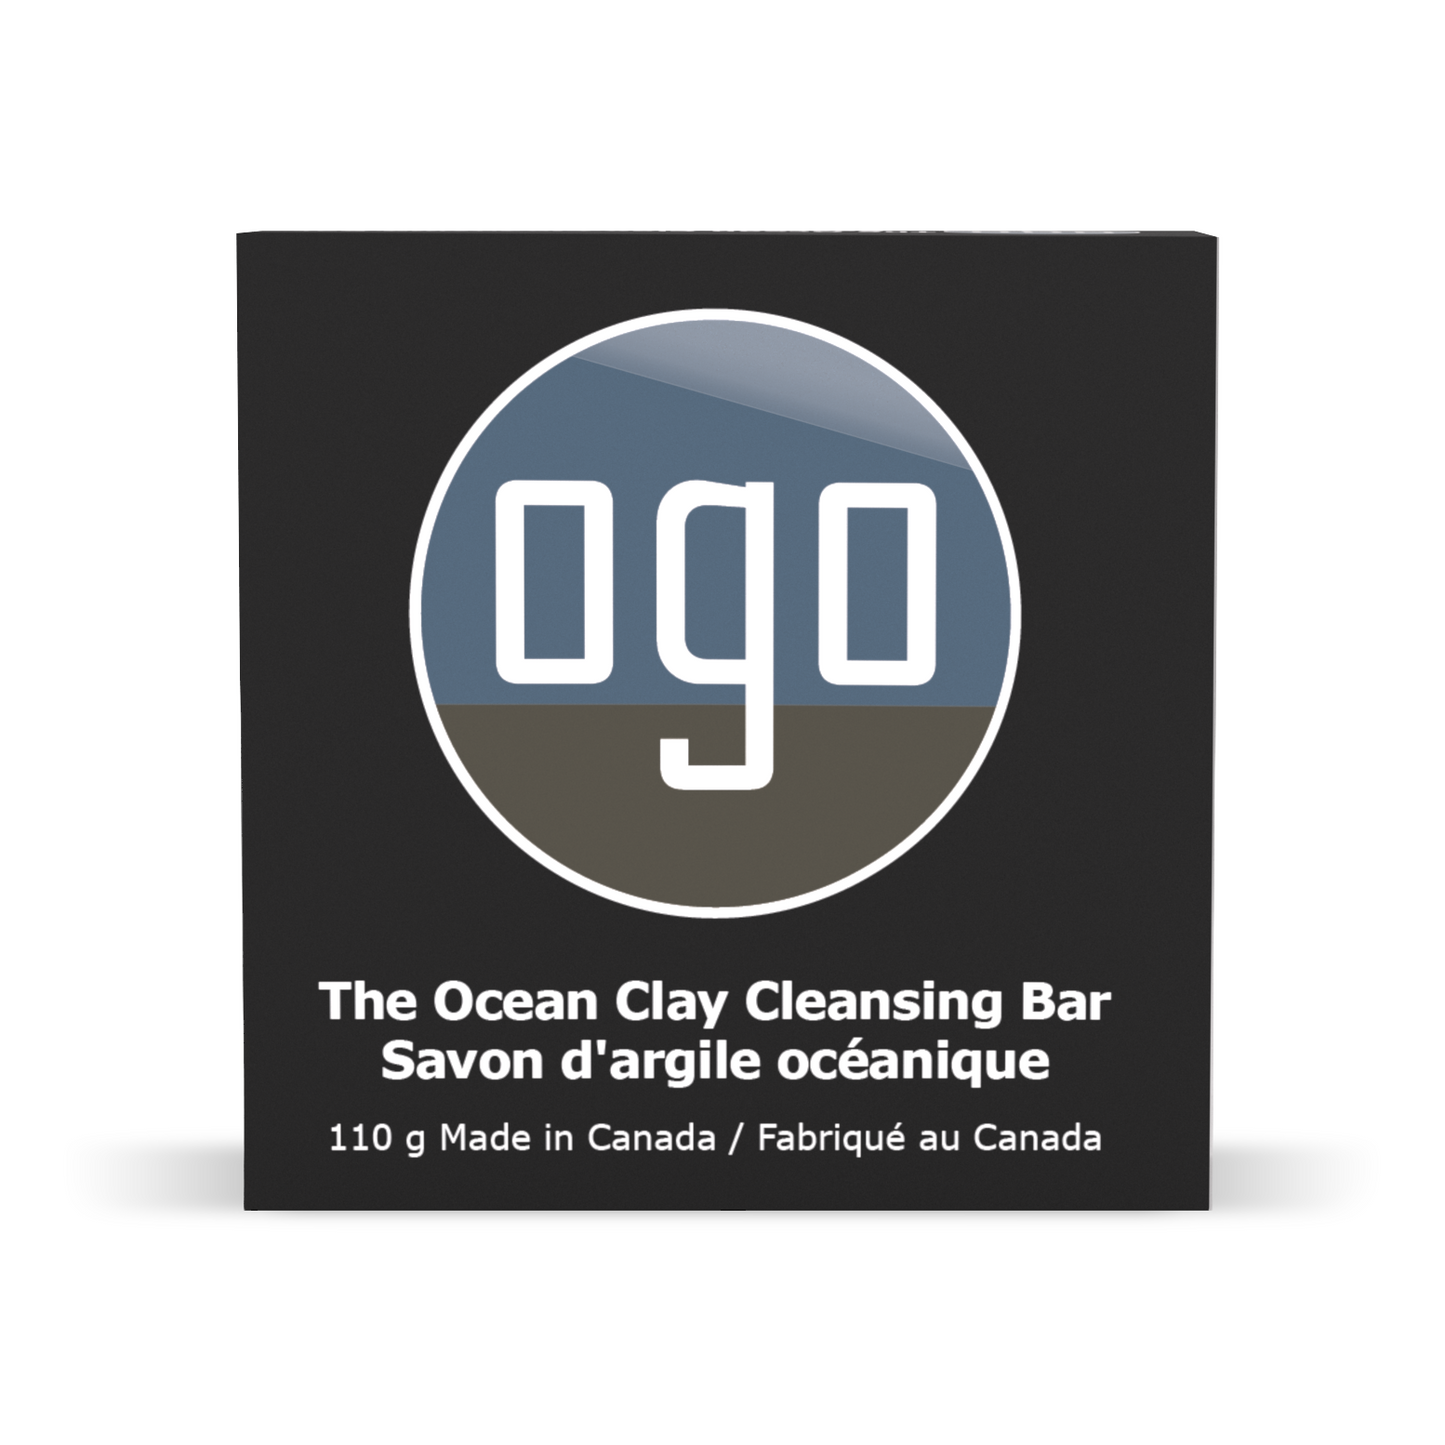 The Ocean Clay Cleansing Bar